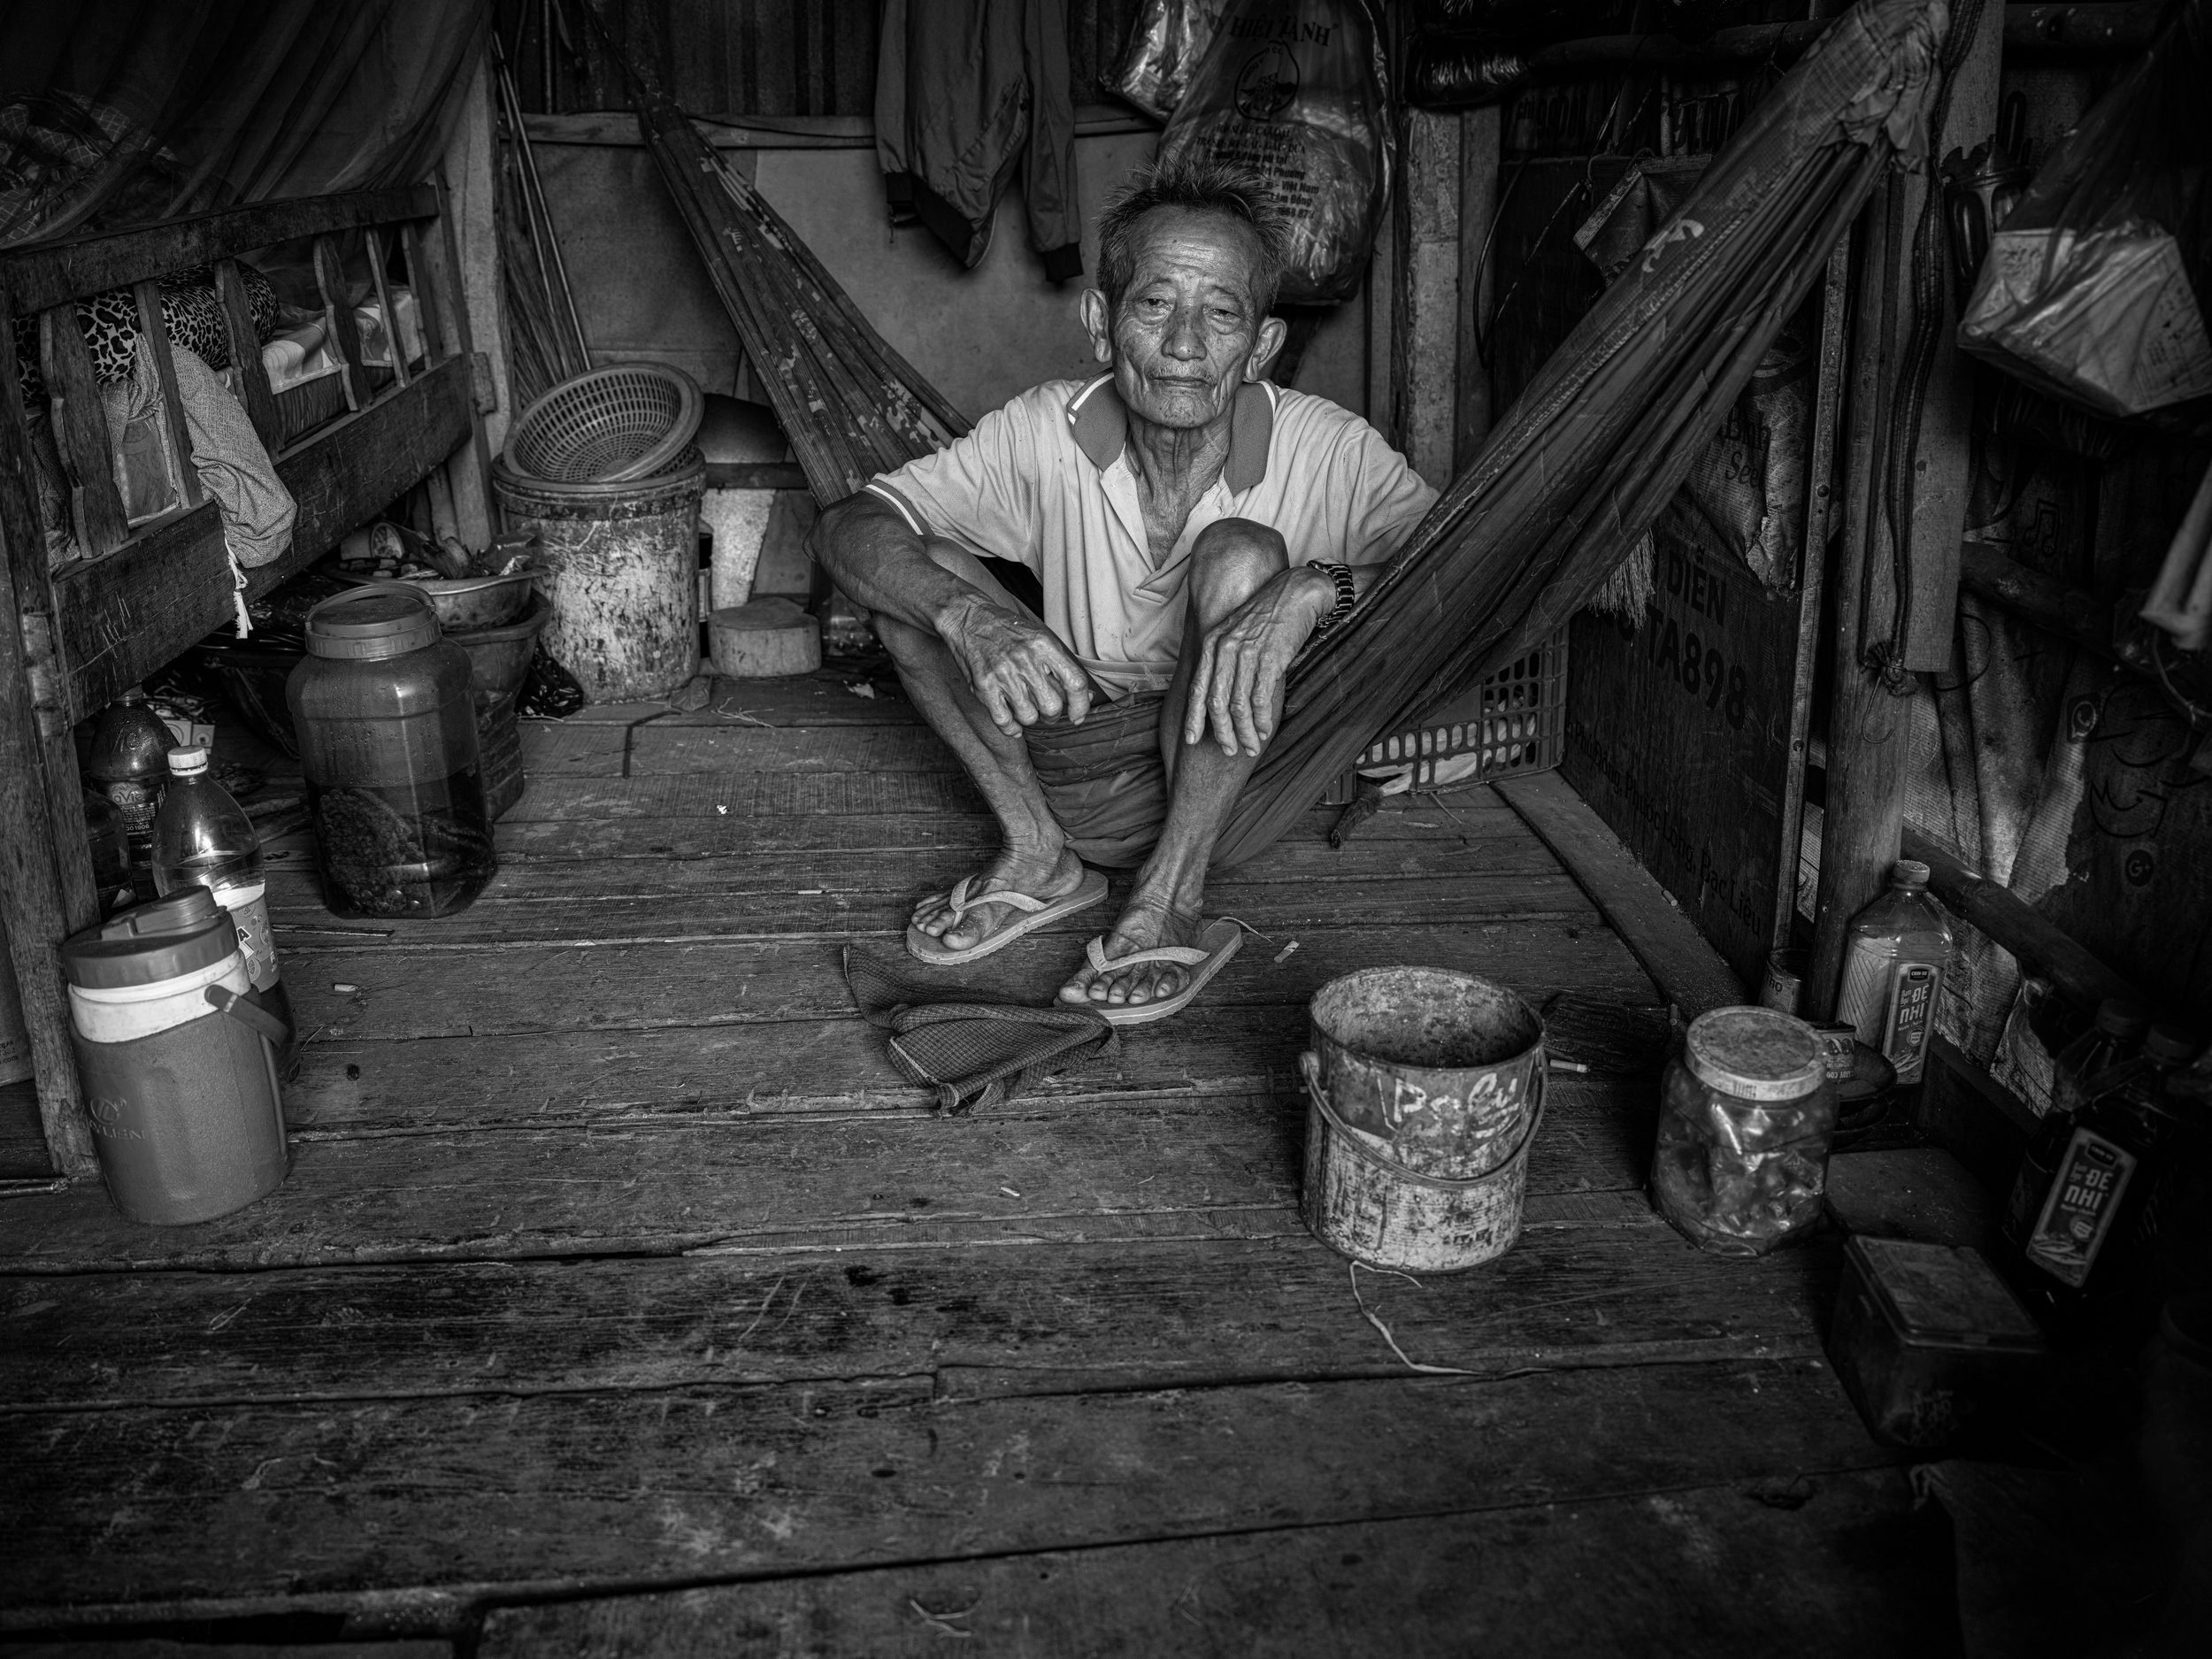  banana seller in his roadside house,soc trang province, vietnam 